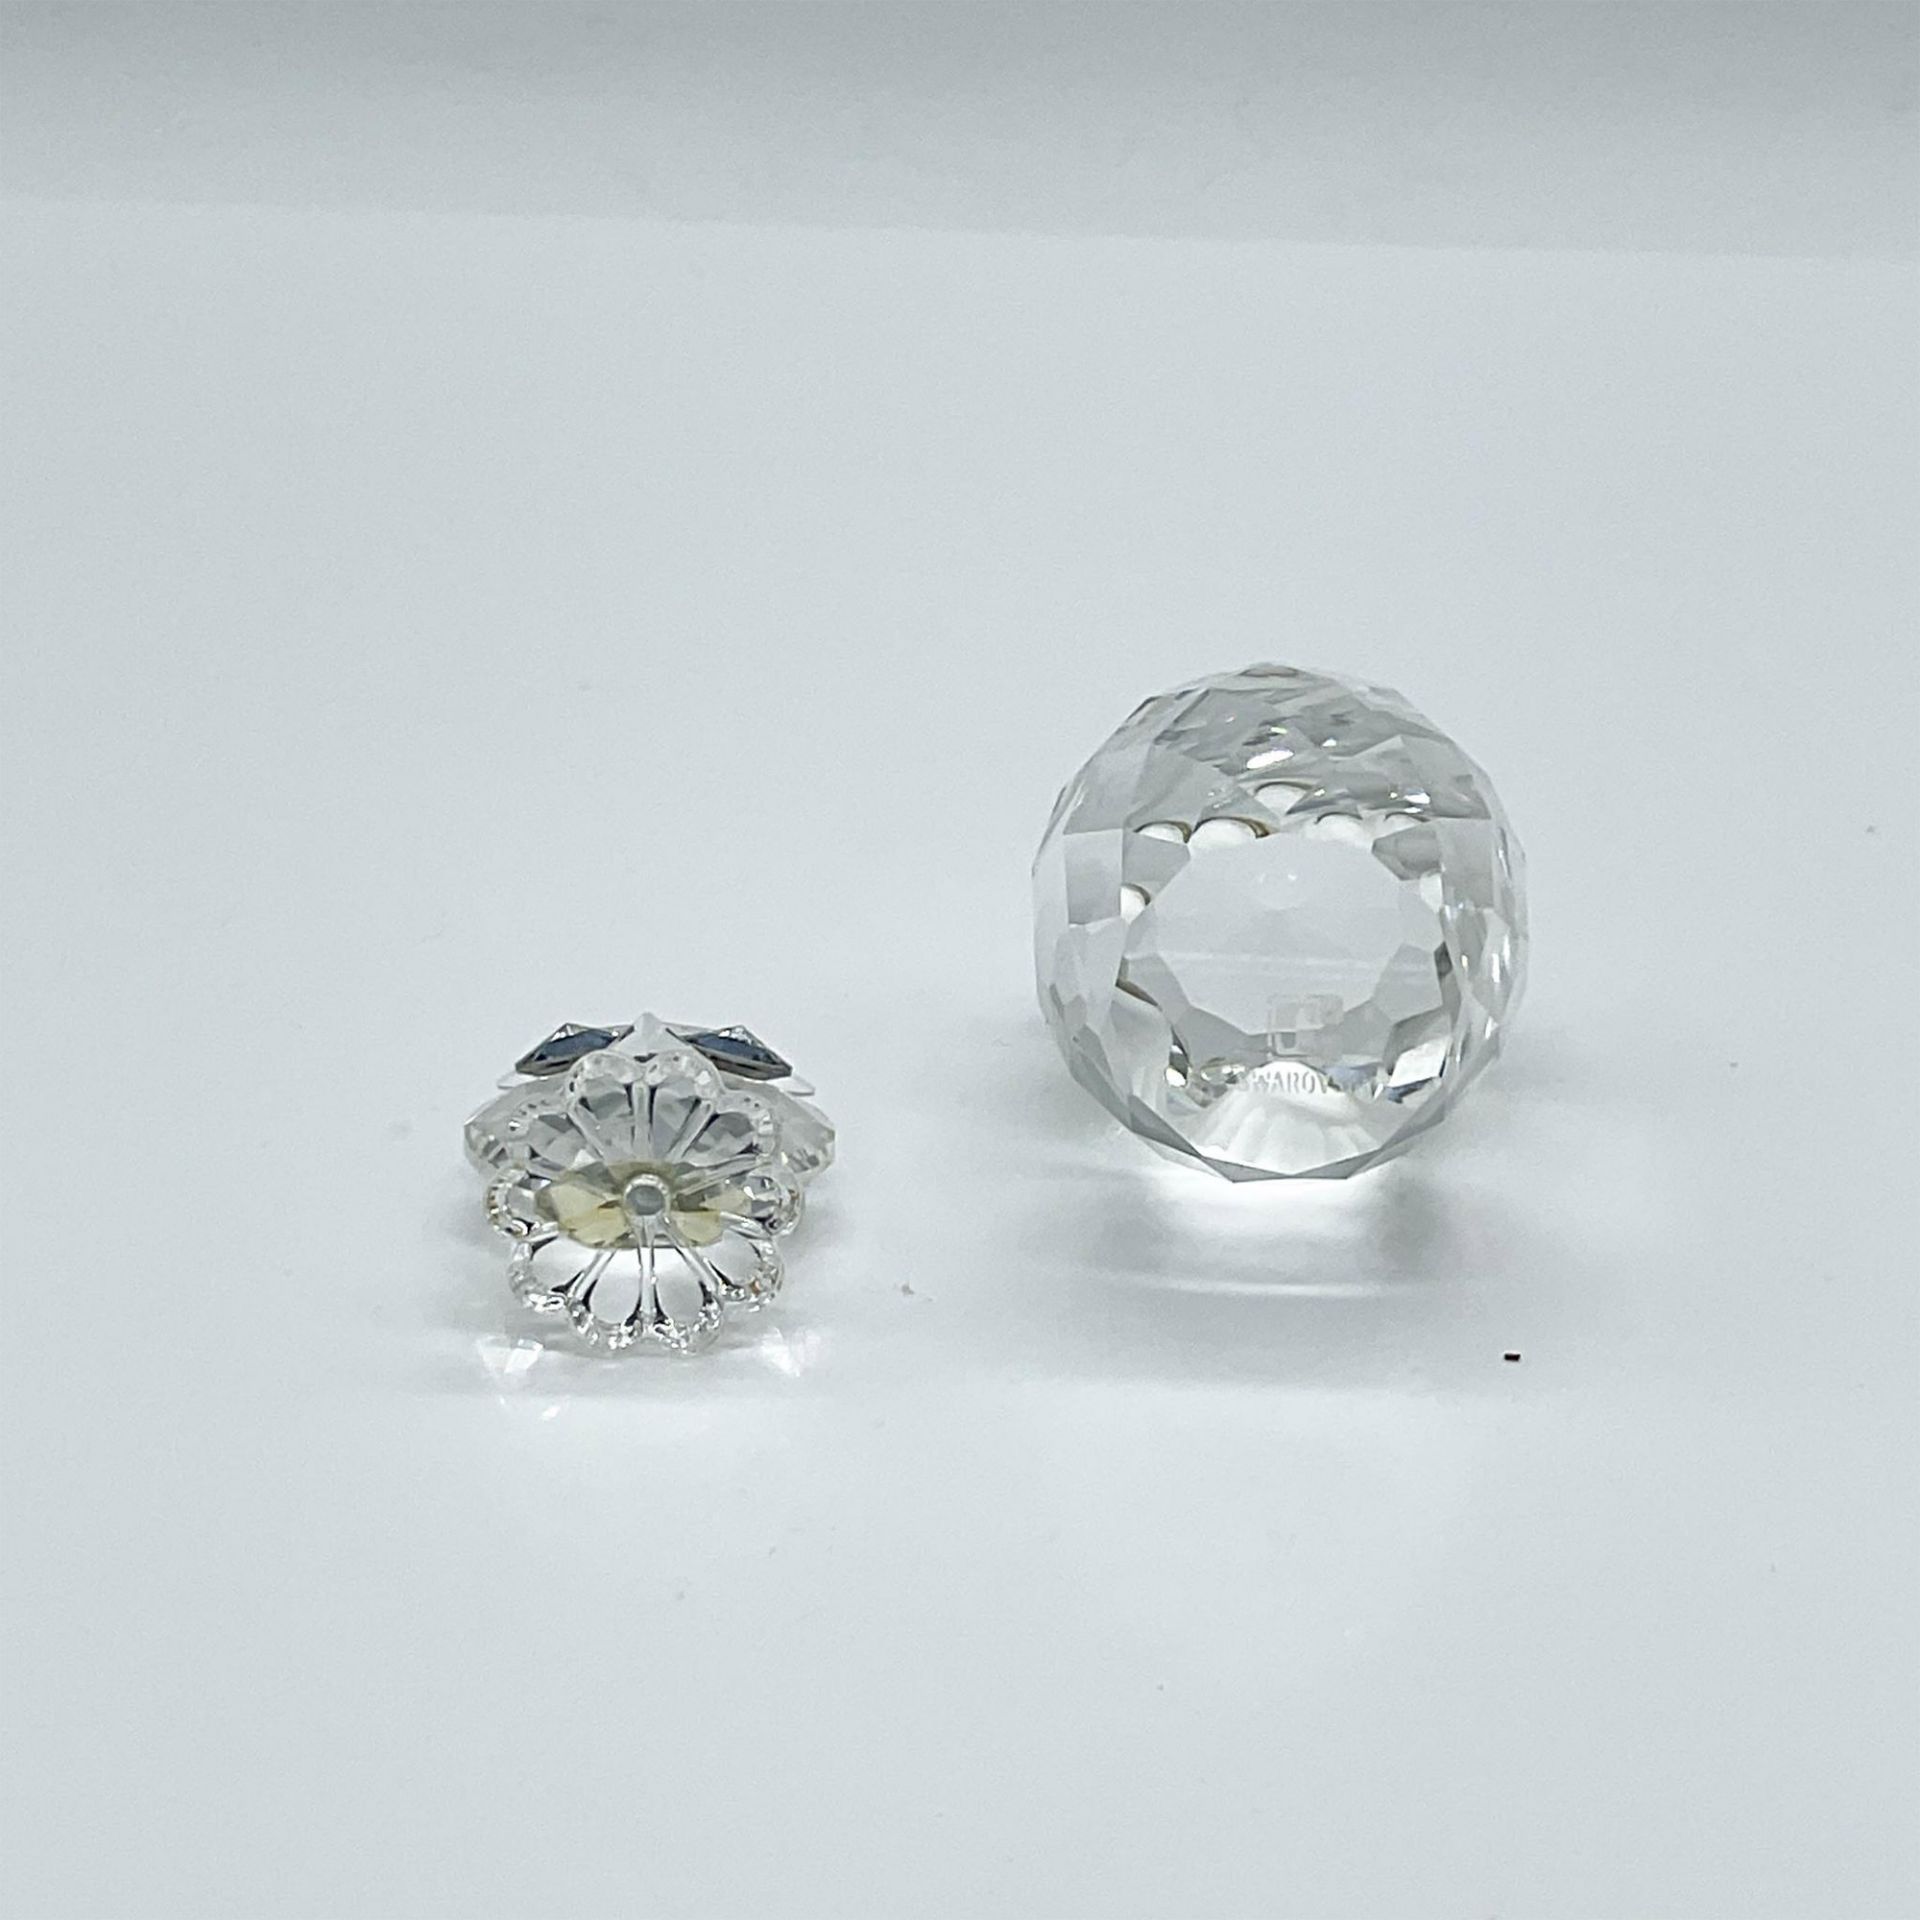 2pc Swarovski Crystal Figurines, Owls - Image 3 of 3